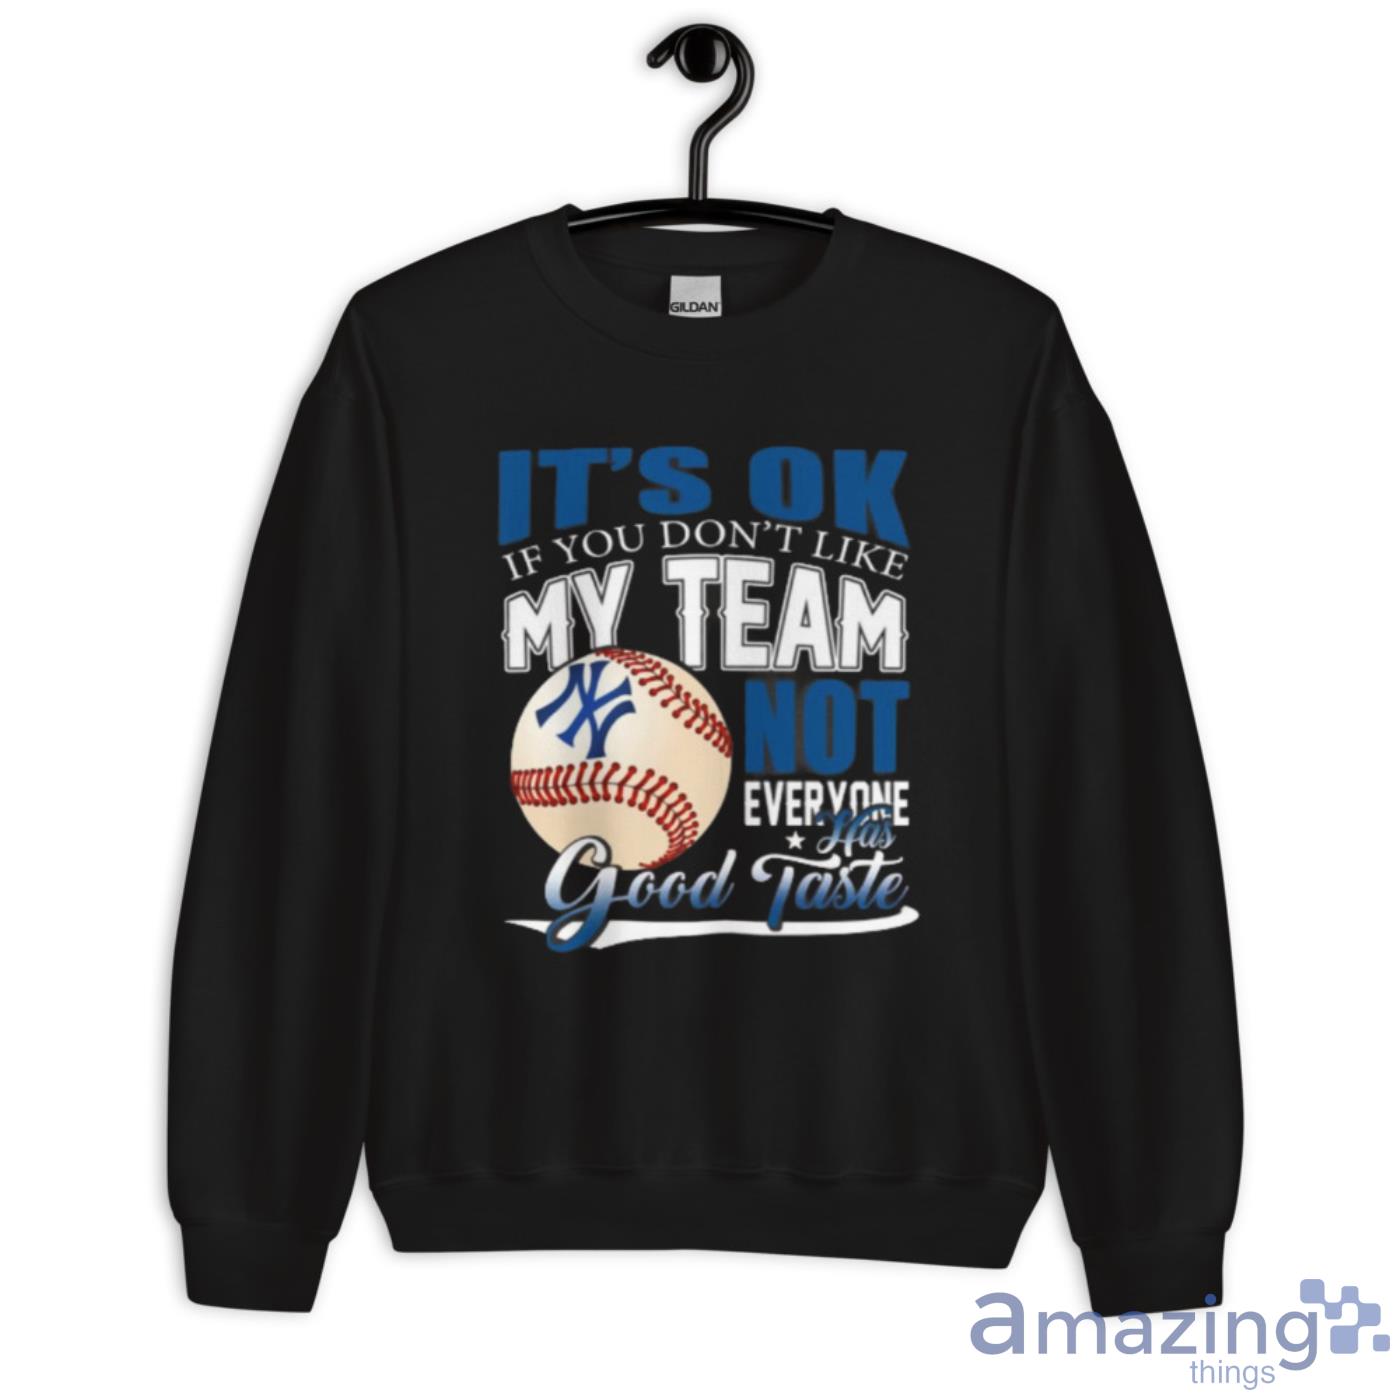 MVP Giancarlo Stanton New York Yankees all star game shirt, hoodie,  sweater, long sleeve and tank top